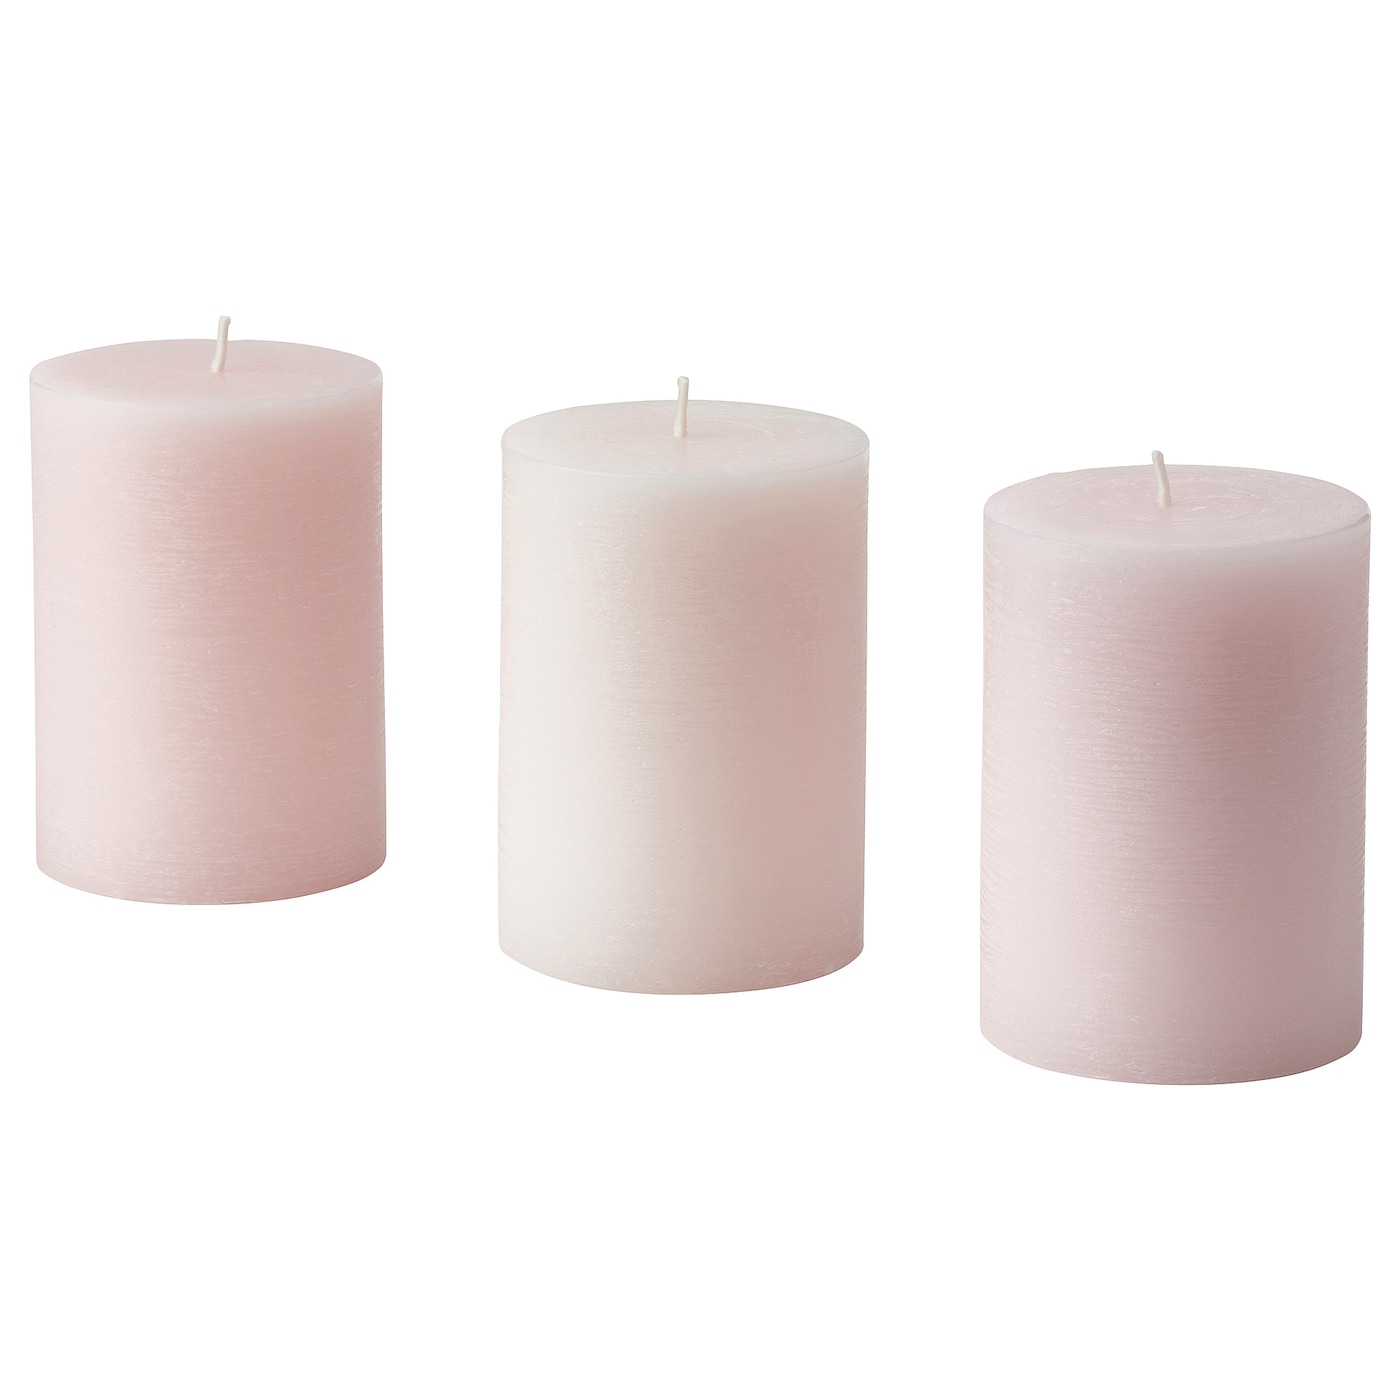 Ароматическя блочная свеча - IKEA LUGNARE/ЛУГНАРЕ ИКЕА, 10х7 см, розовый, 3 шт